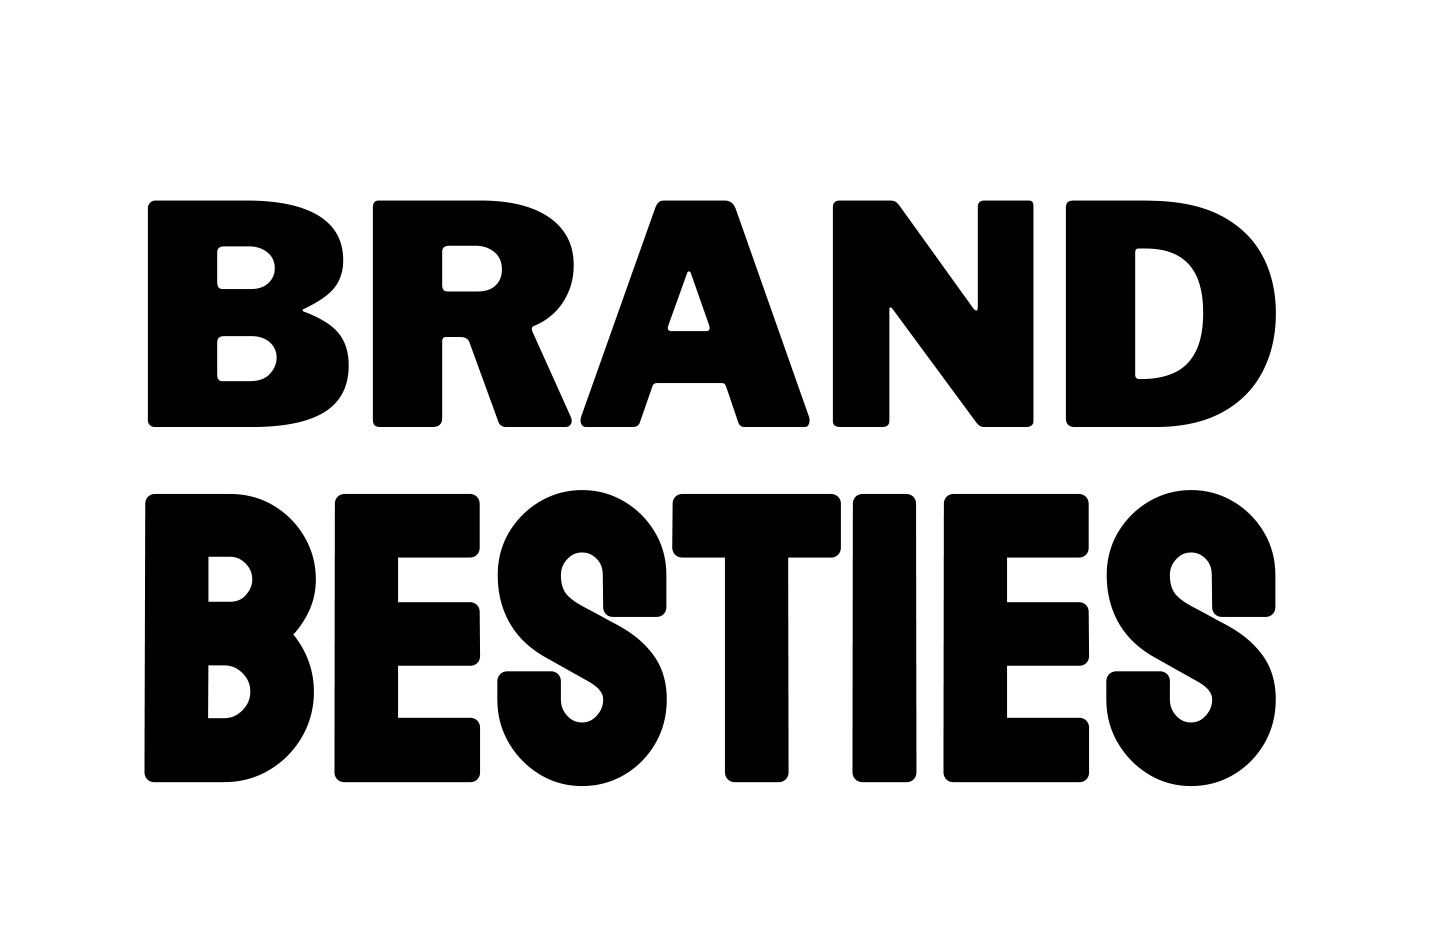 Brand Besties logo in black